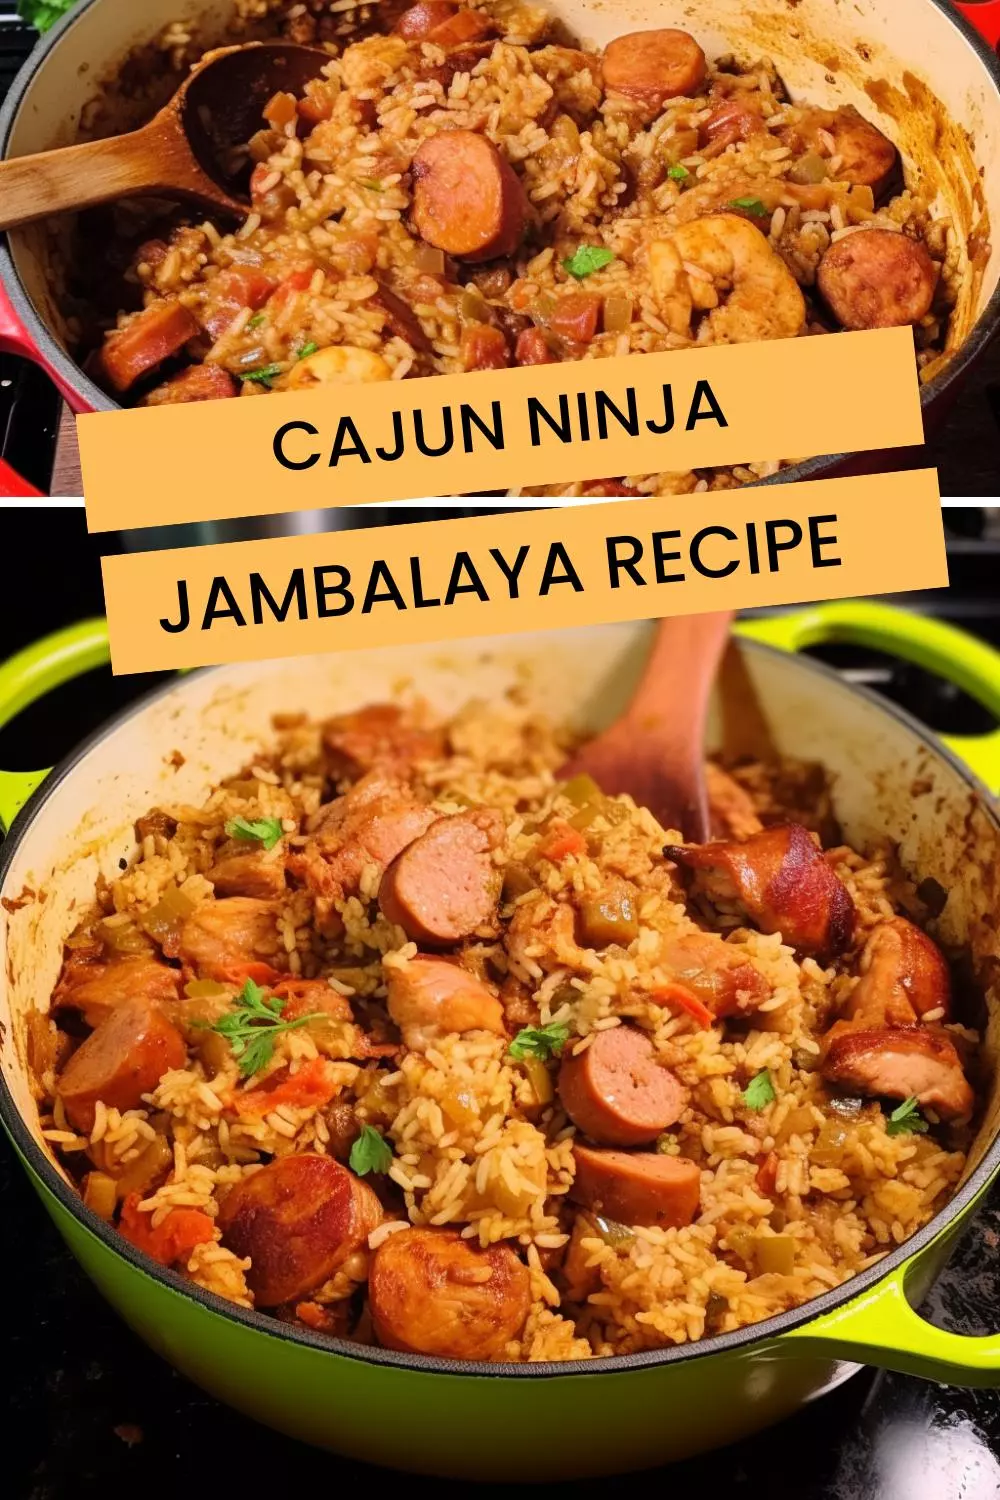 The Cajun Ninja - The Cajun Ninja's New Chicken & Sausage